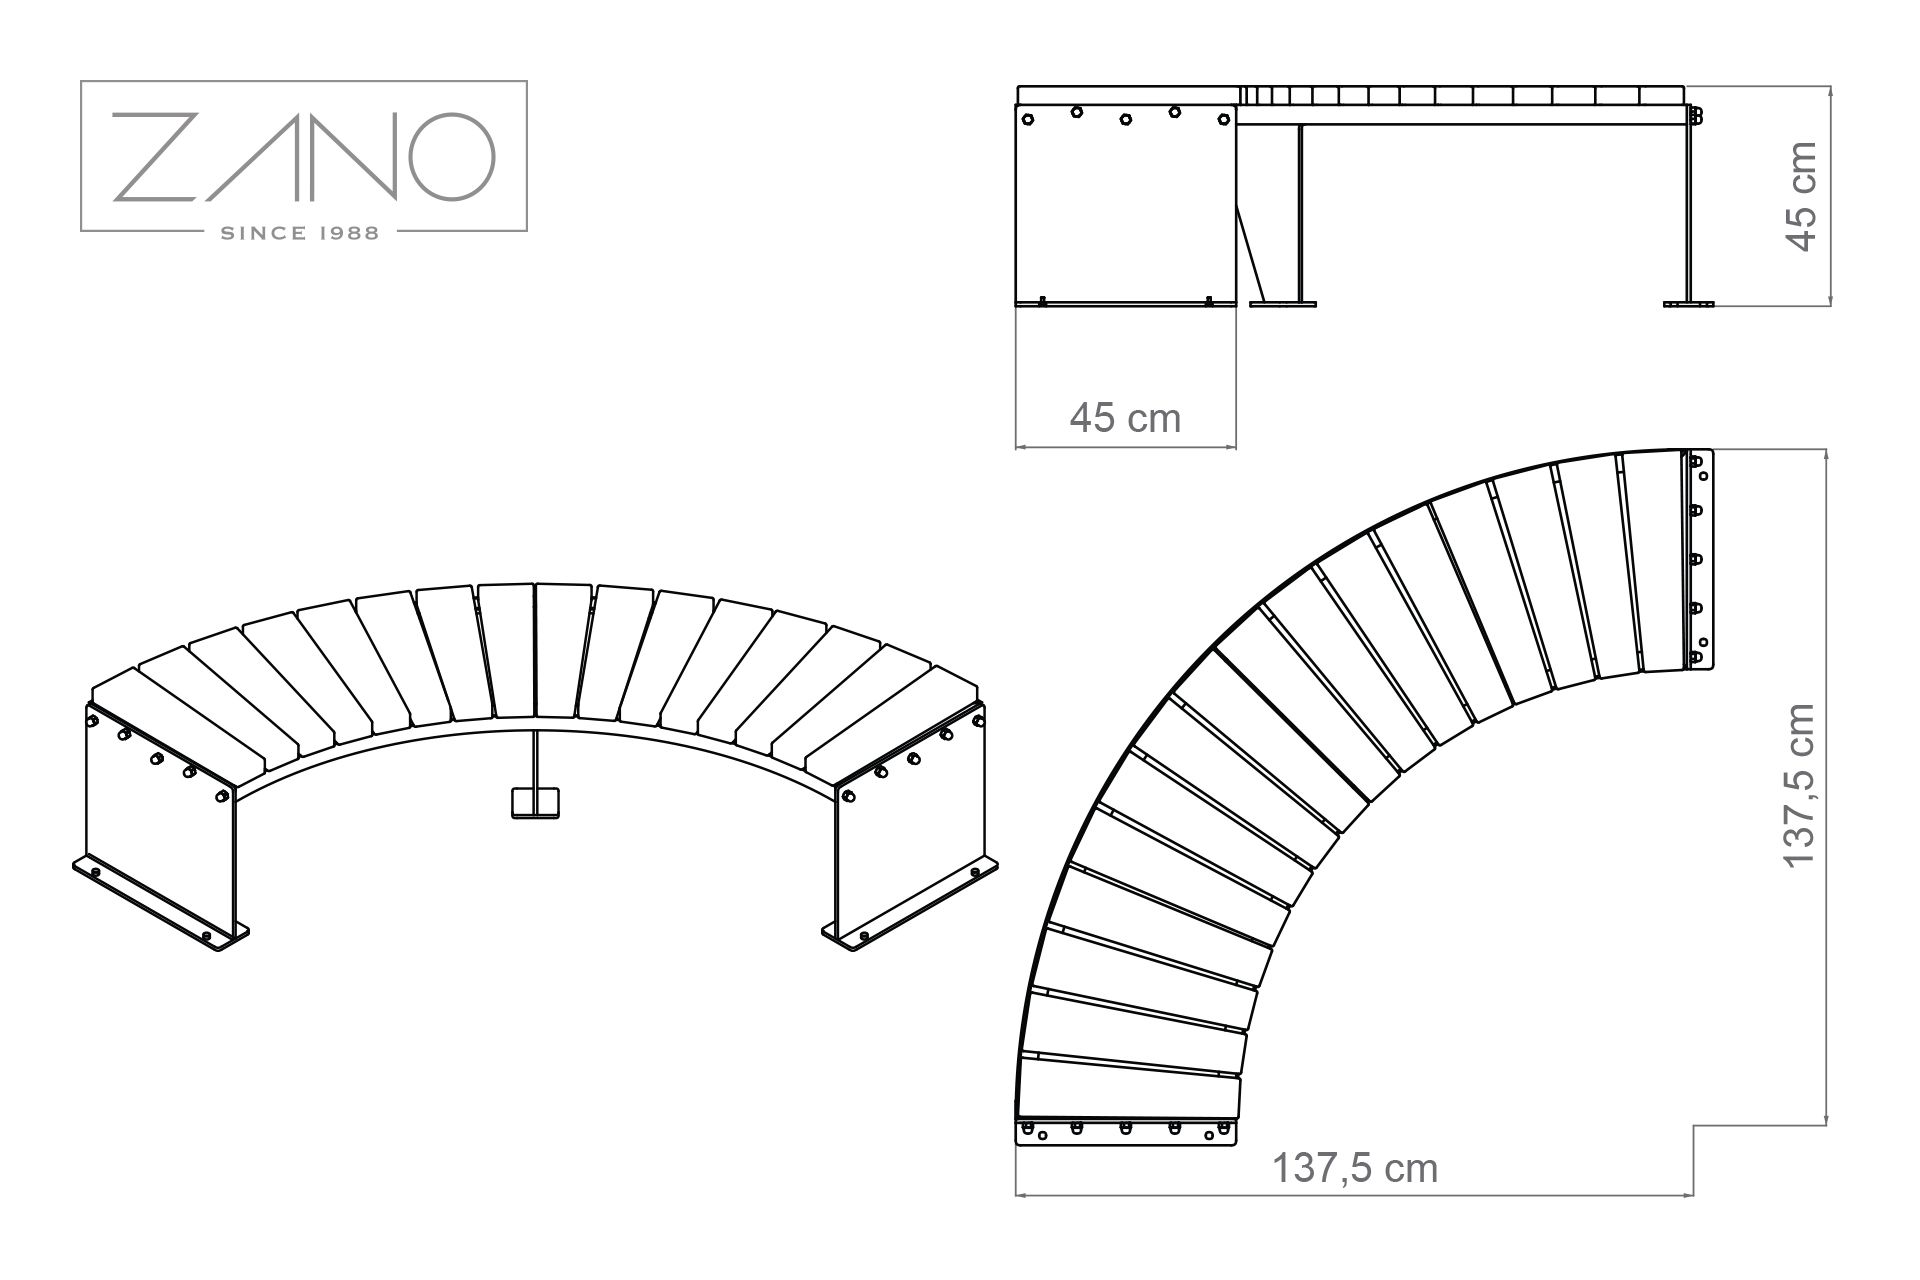 Domino 90 bench 02.440.1 | dimensions